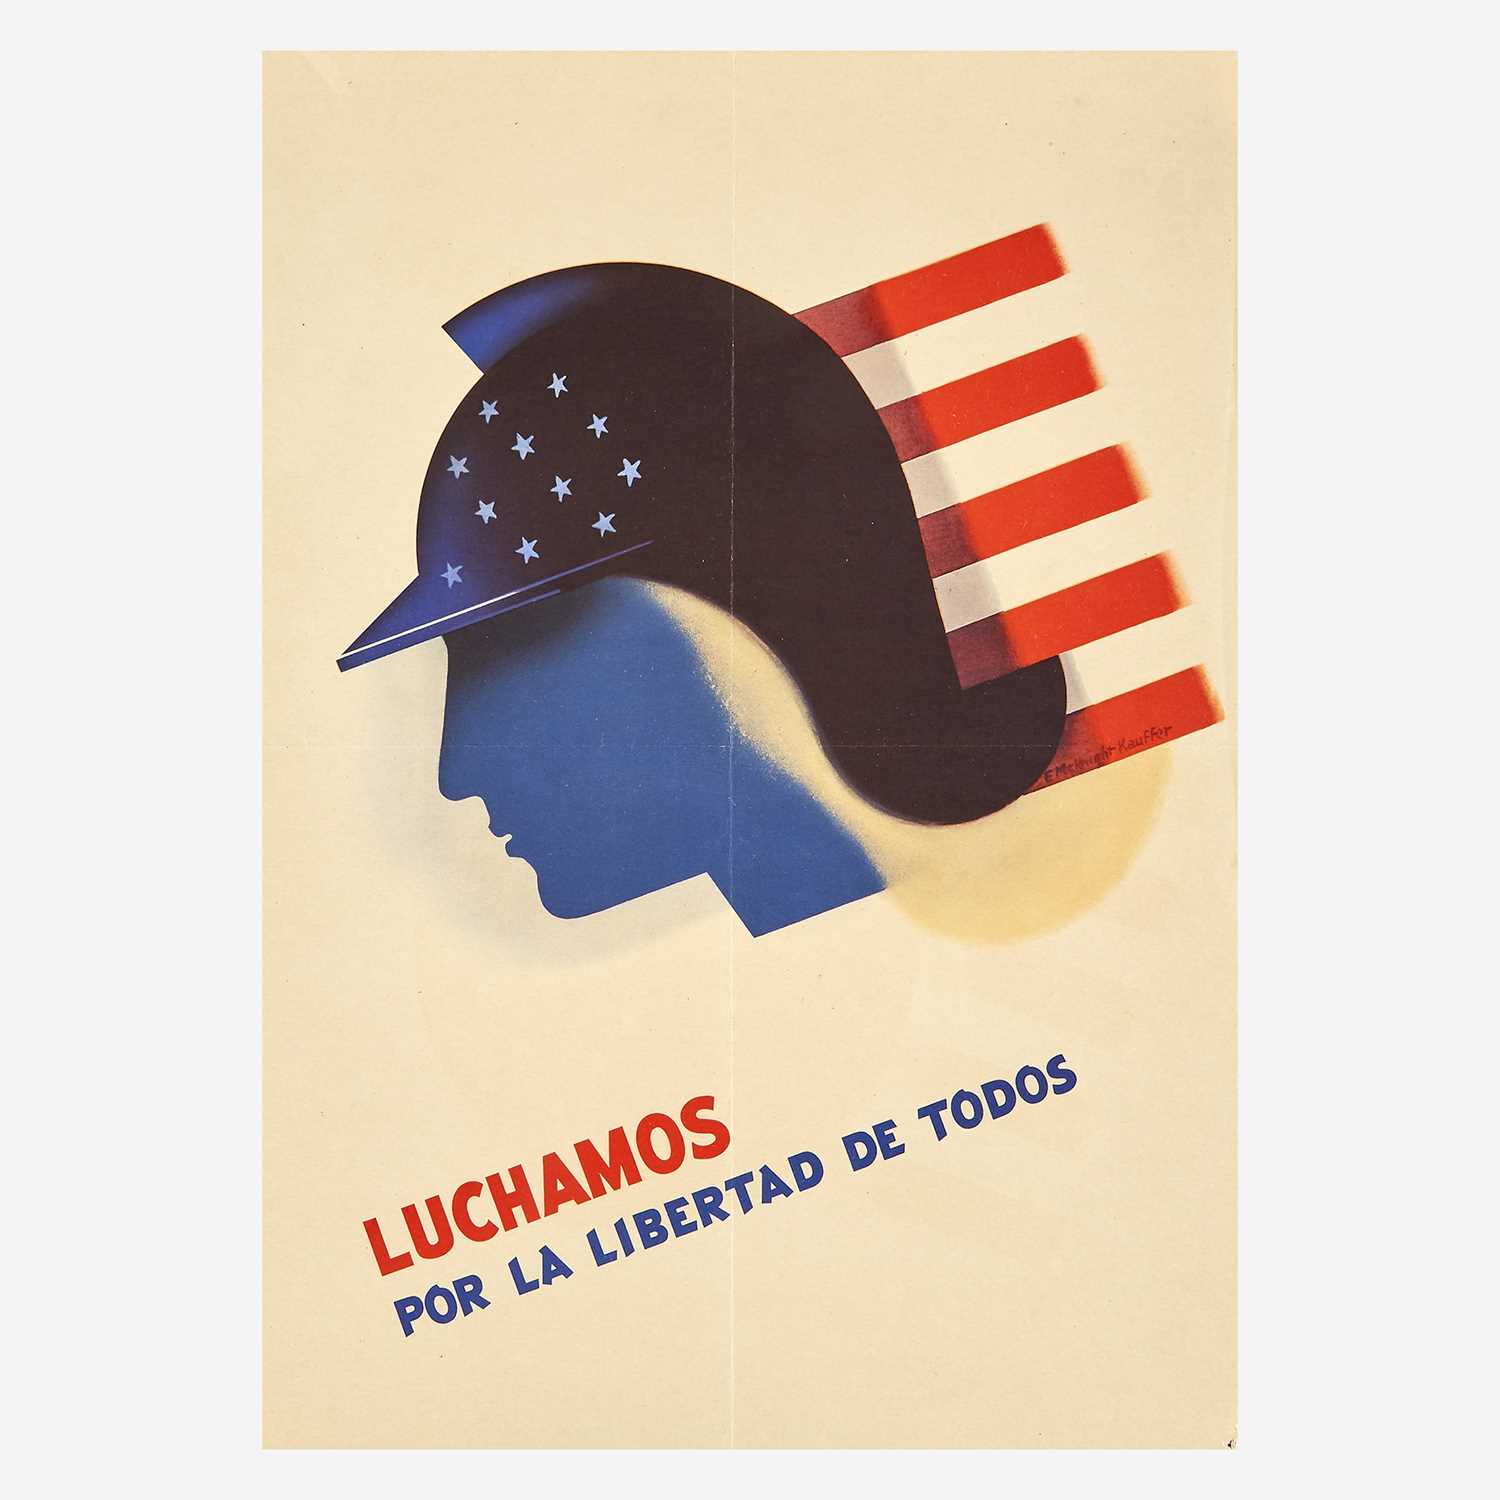 Lot 75 - [Posters] [World War II] Kauffer, E. McKnight